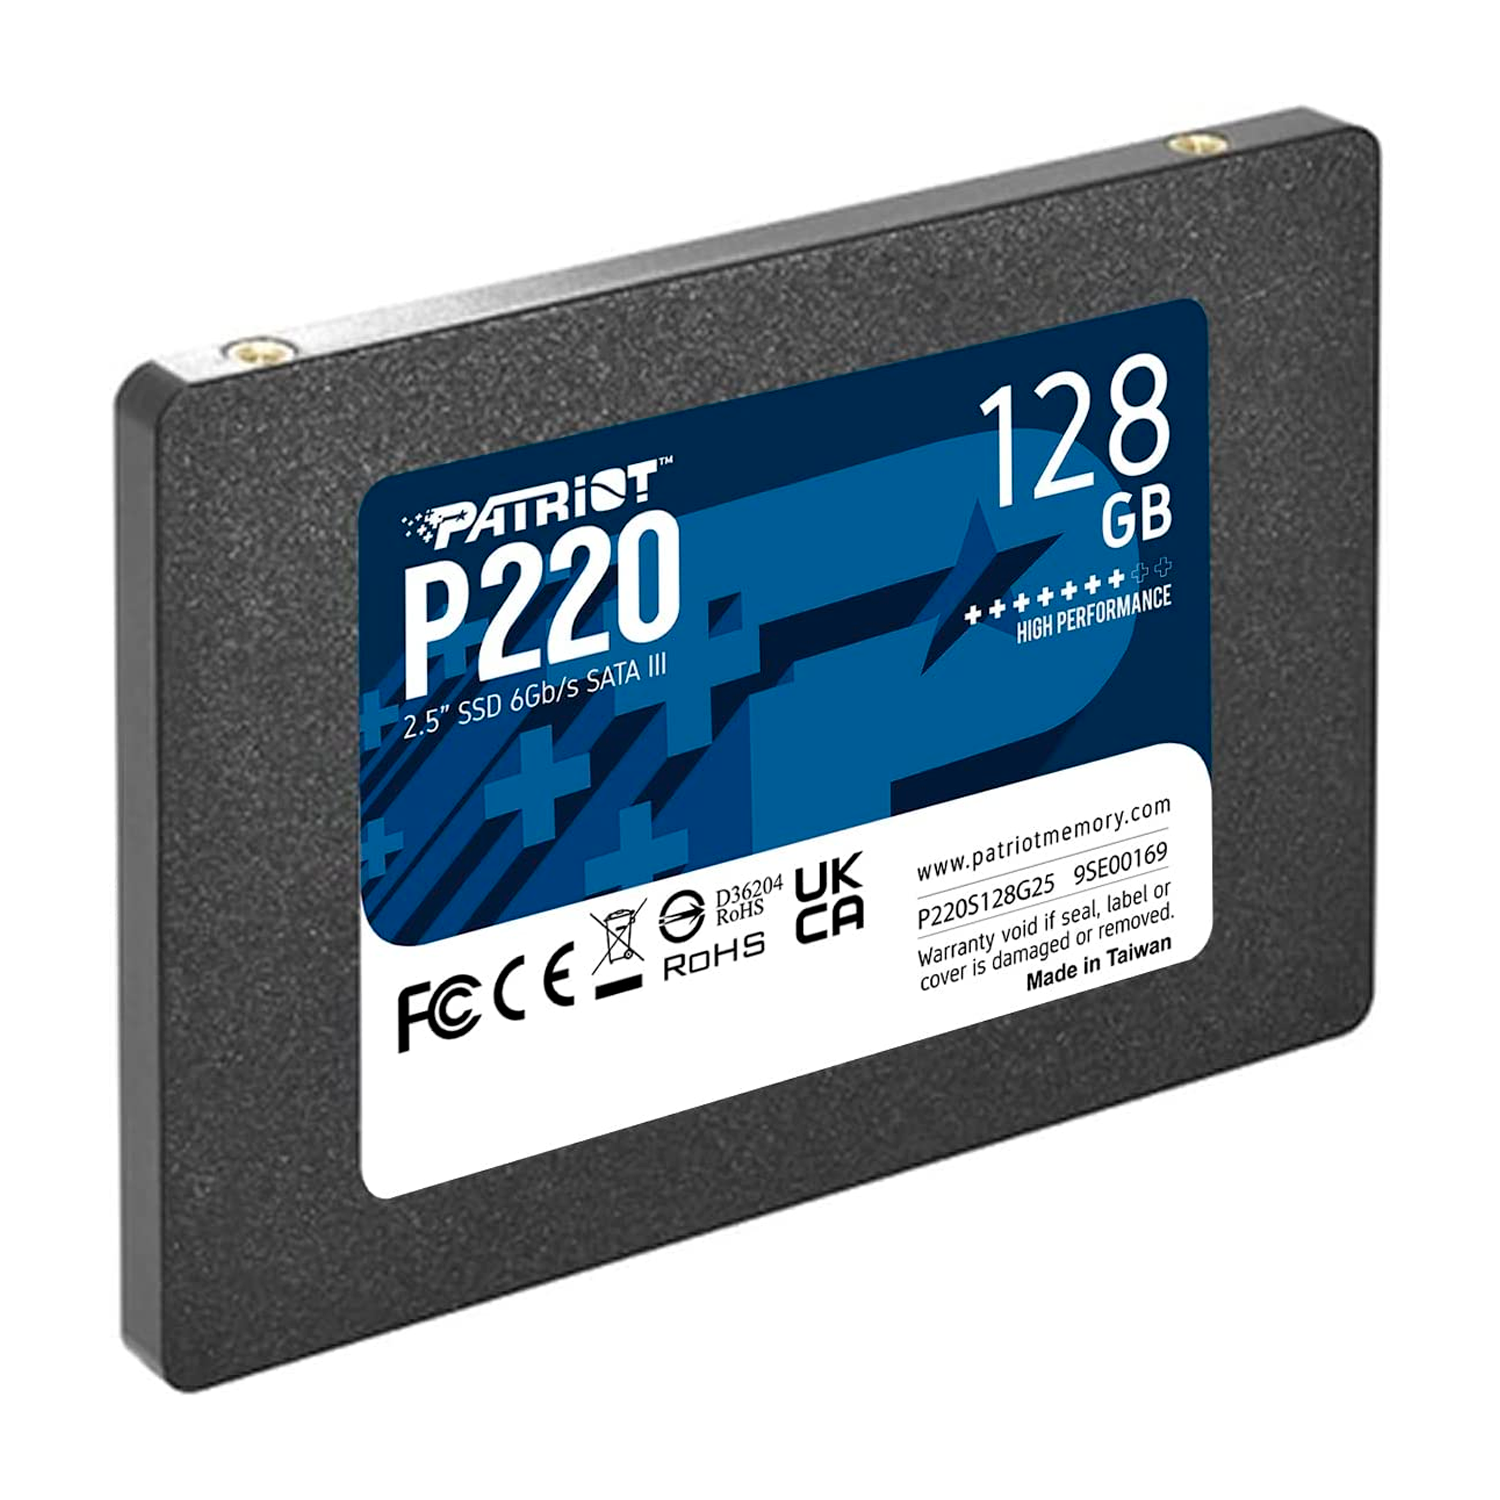 SSD 2.5 Patriot P220 128GB - (P220S128G25)